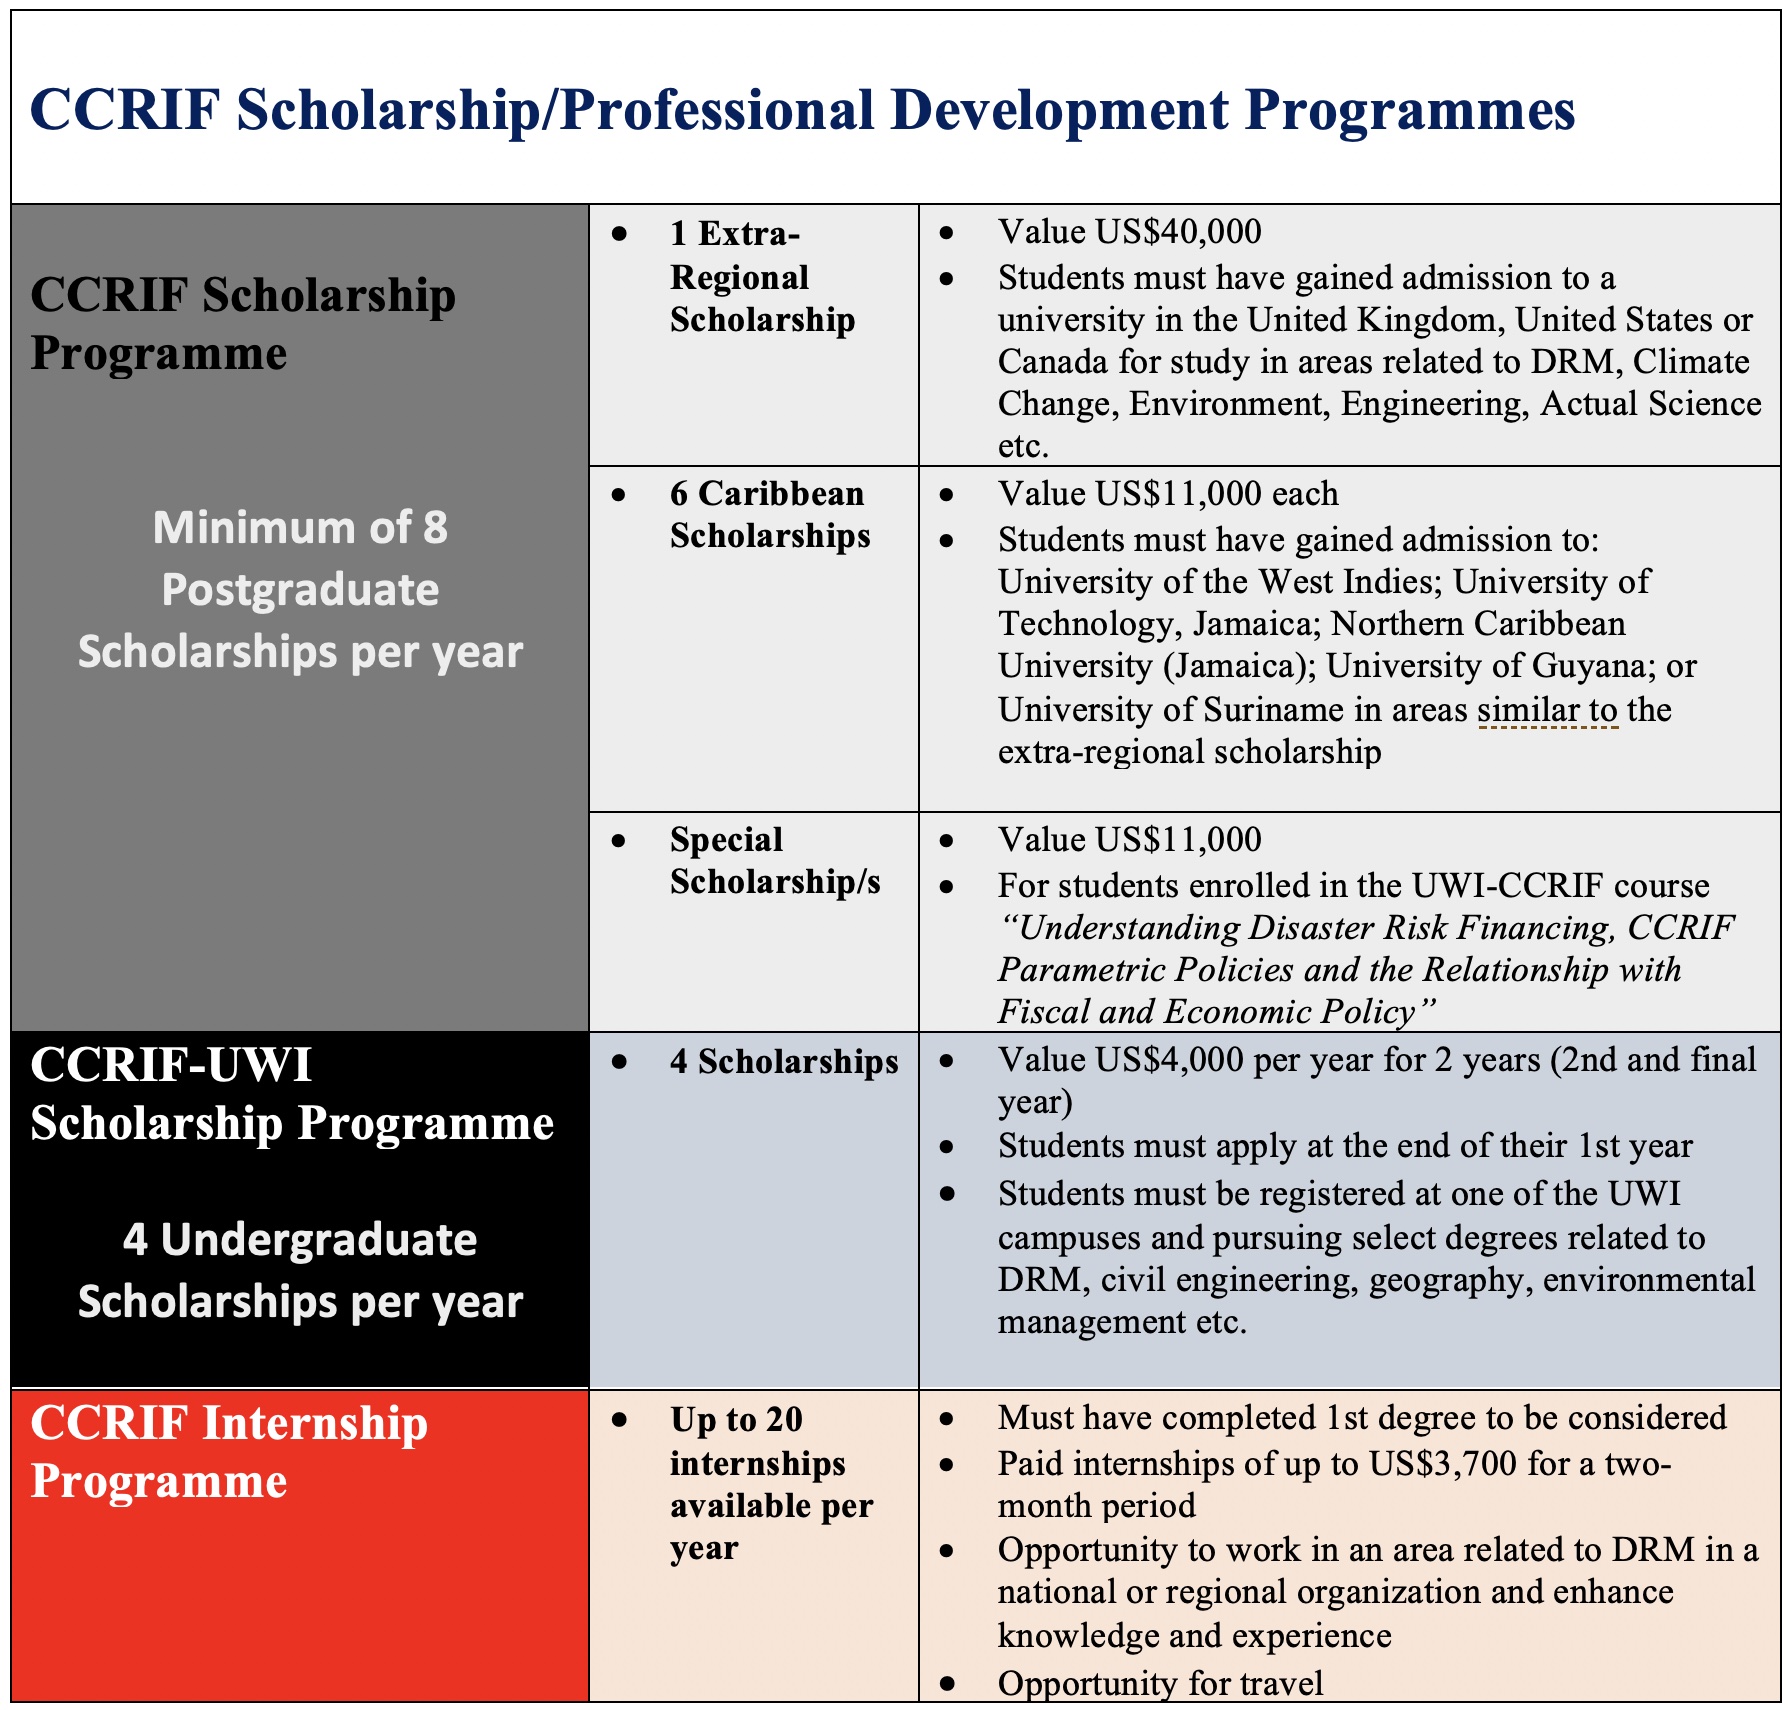 CCRIF Scholarship/Professional Development Programme